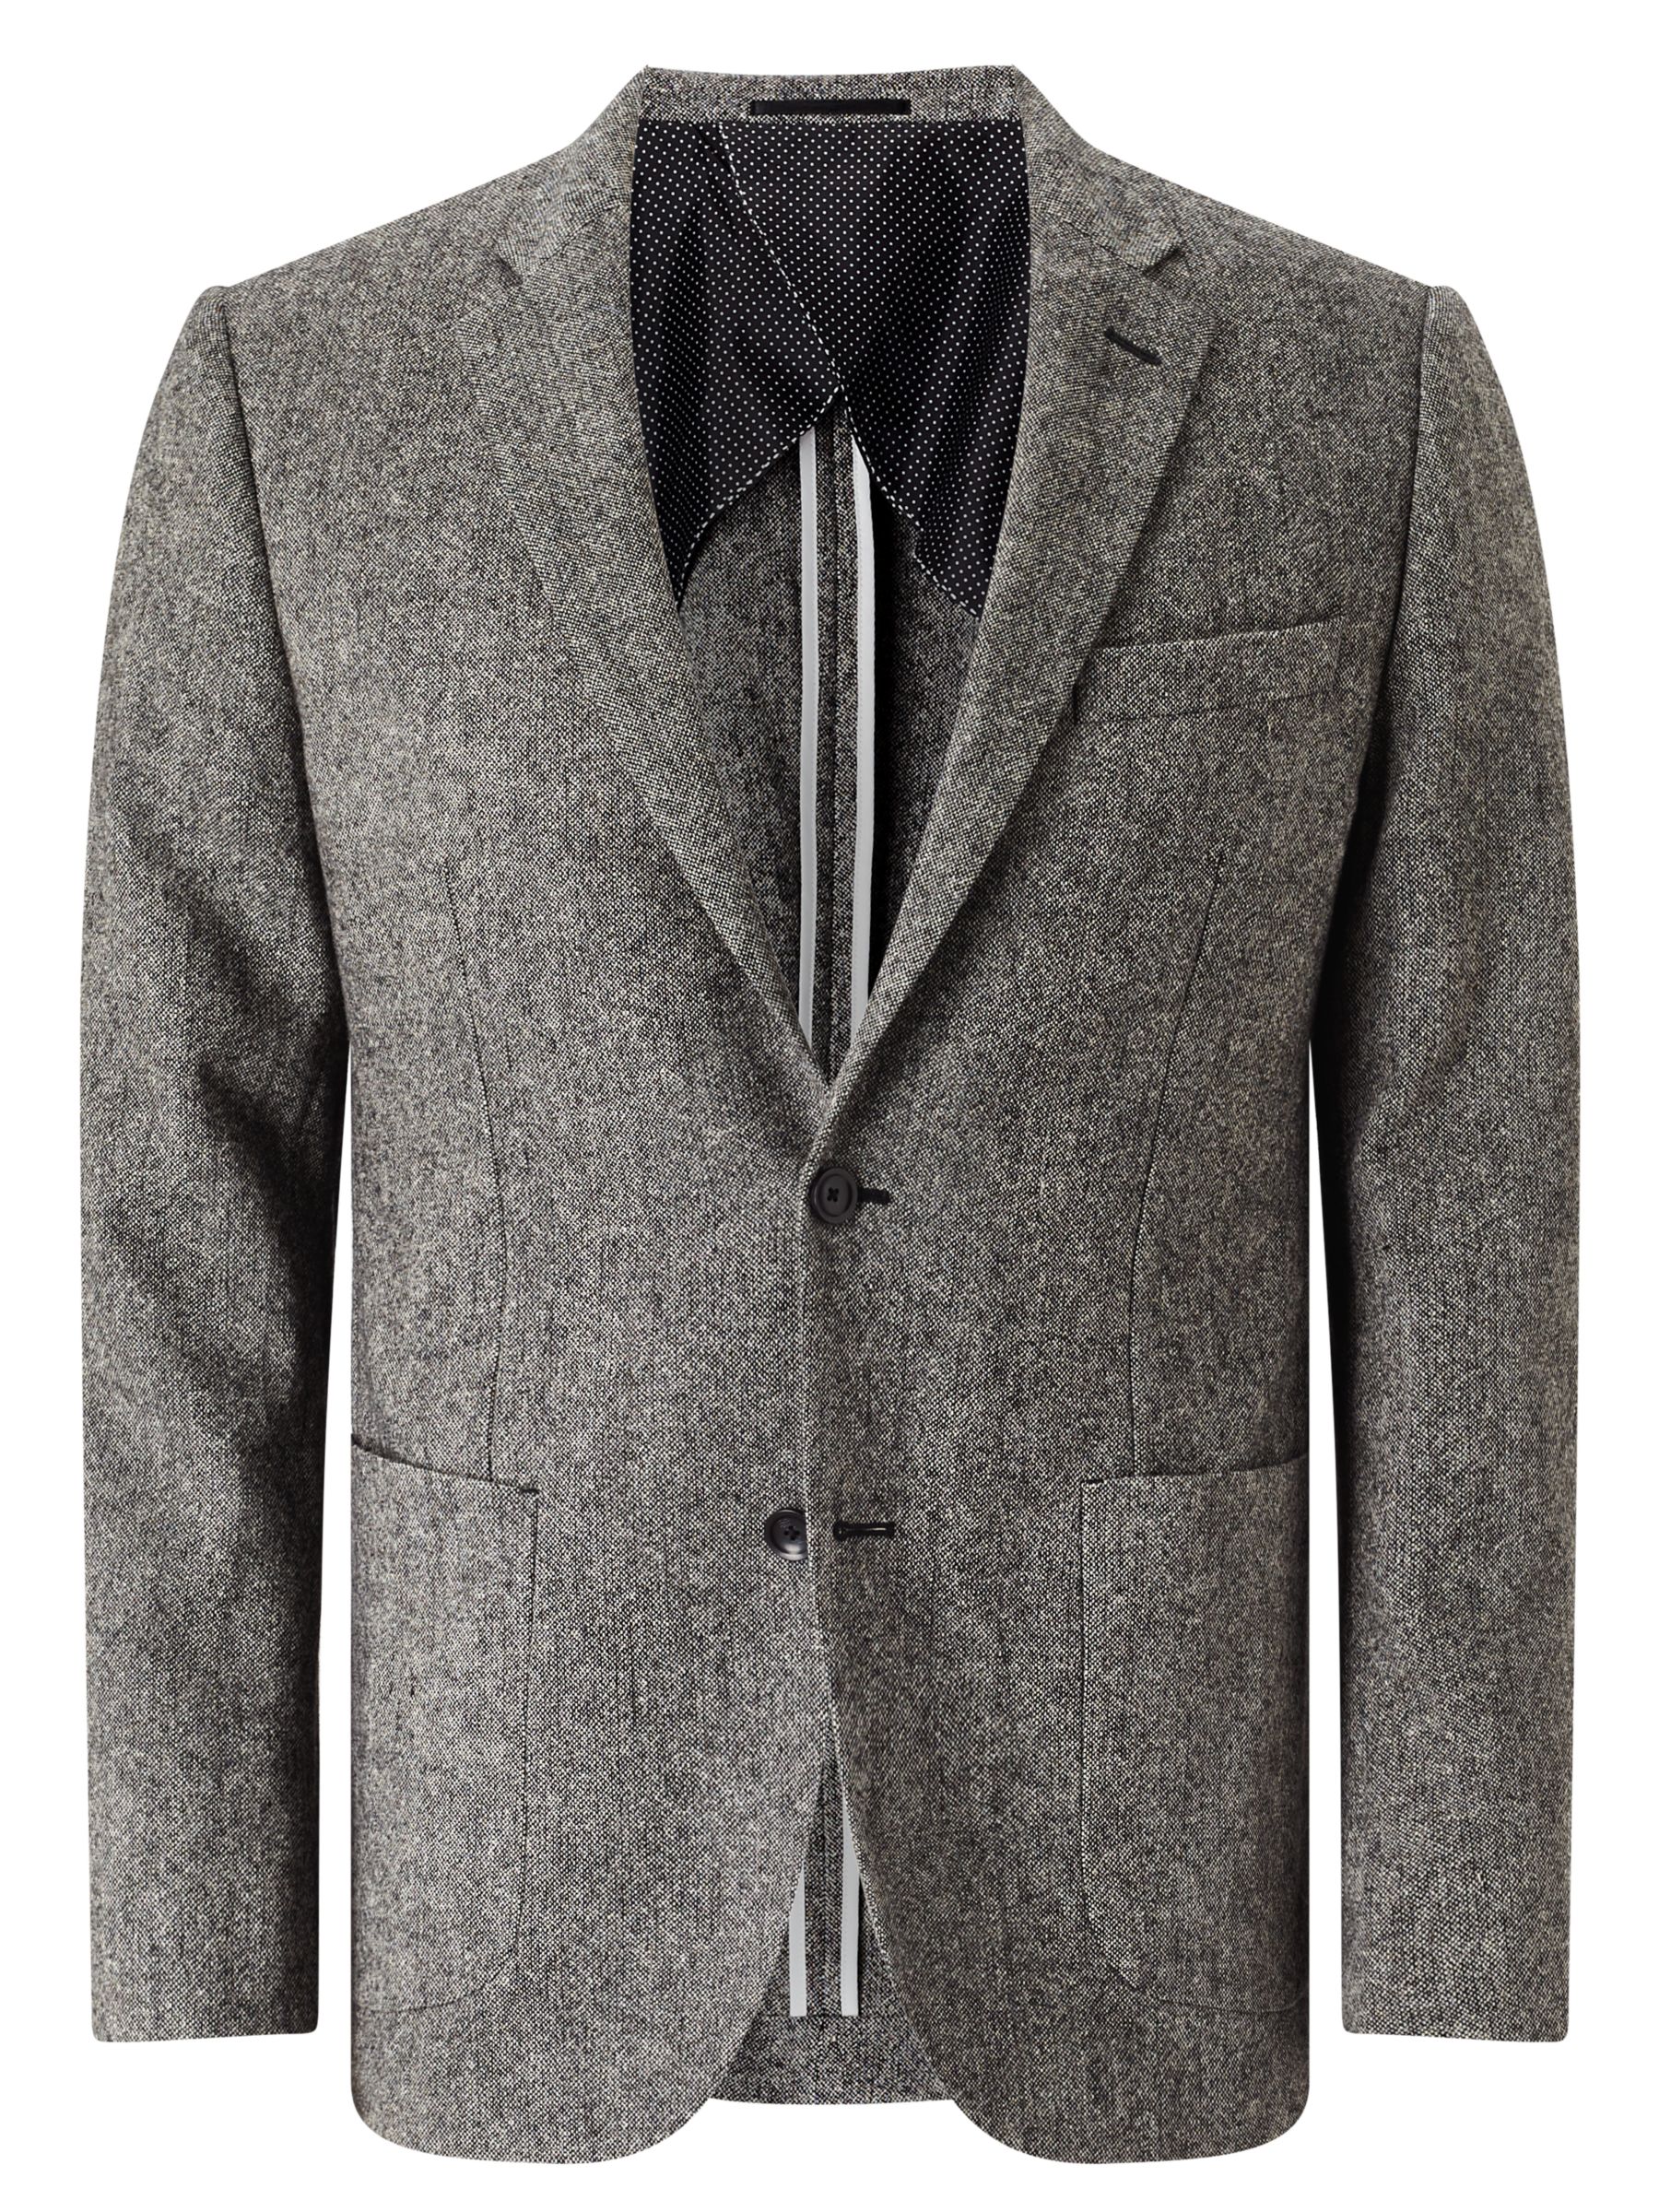 John Lewis & Partners Donegal Wool Tailored Blazer, Light Grey, 44R